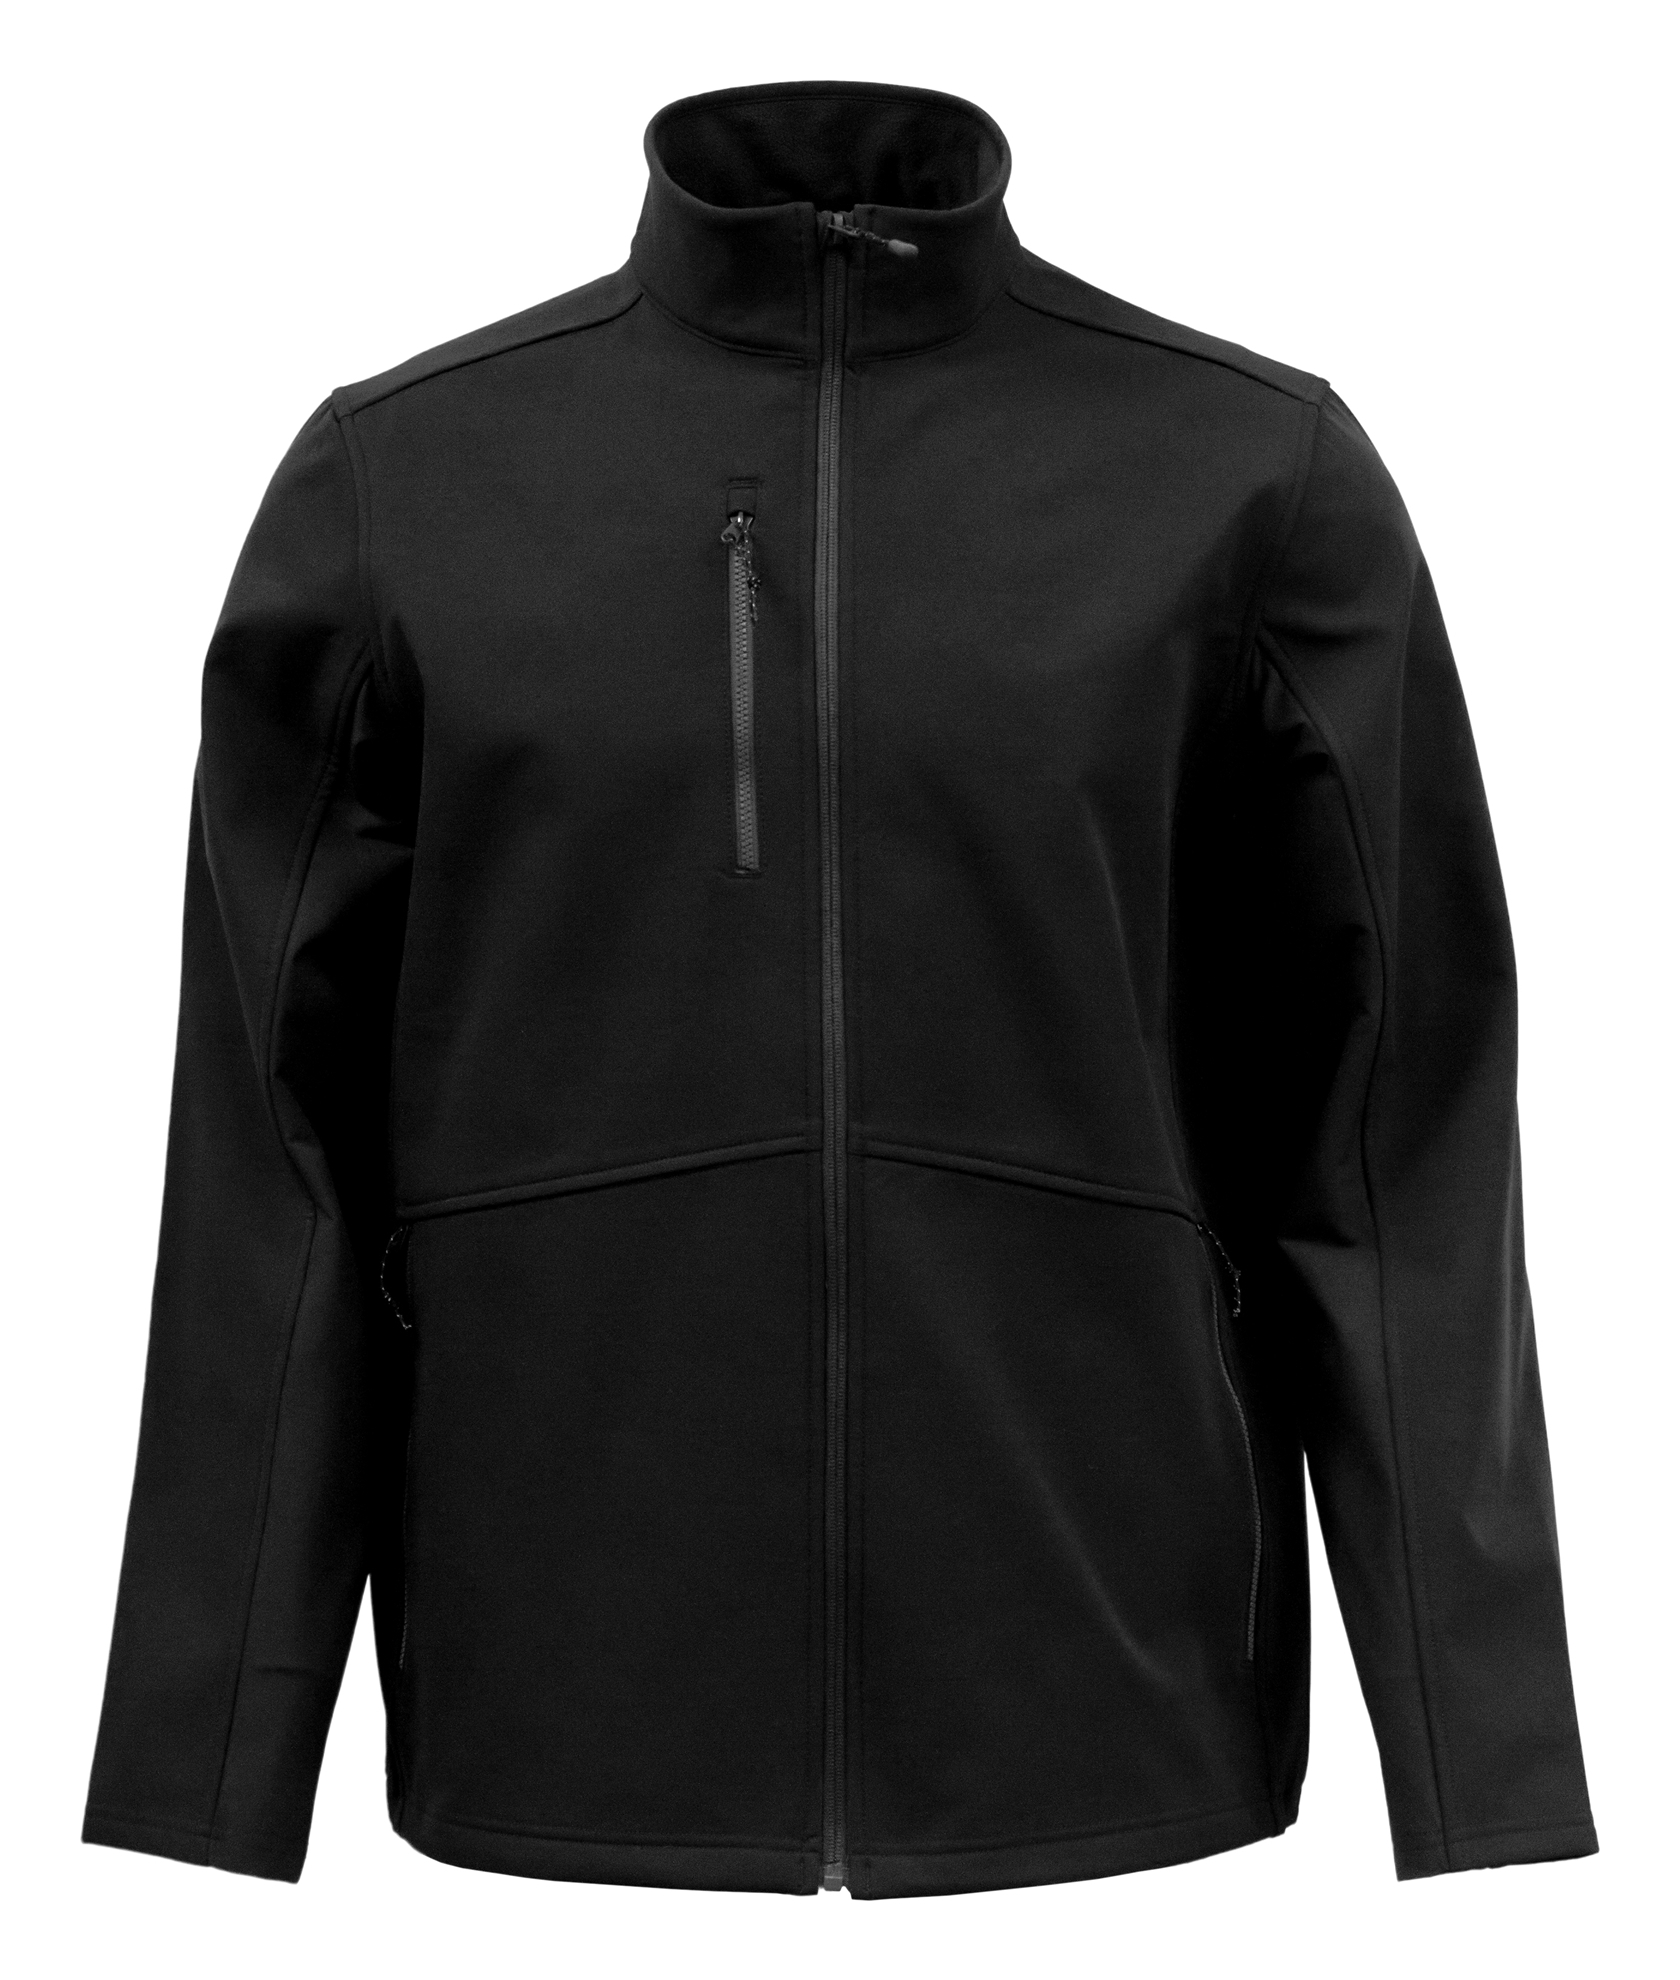 BAW Athletic Wear ST20 - Men's Softshell Jacket